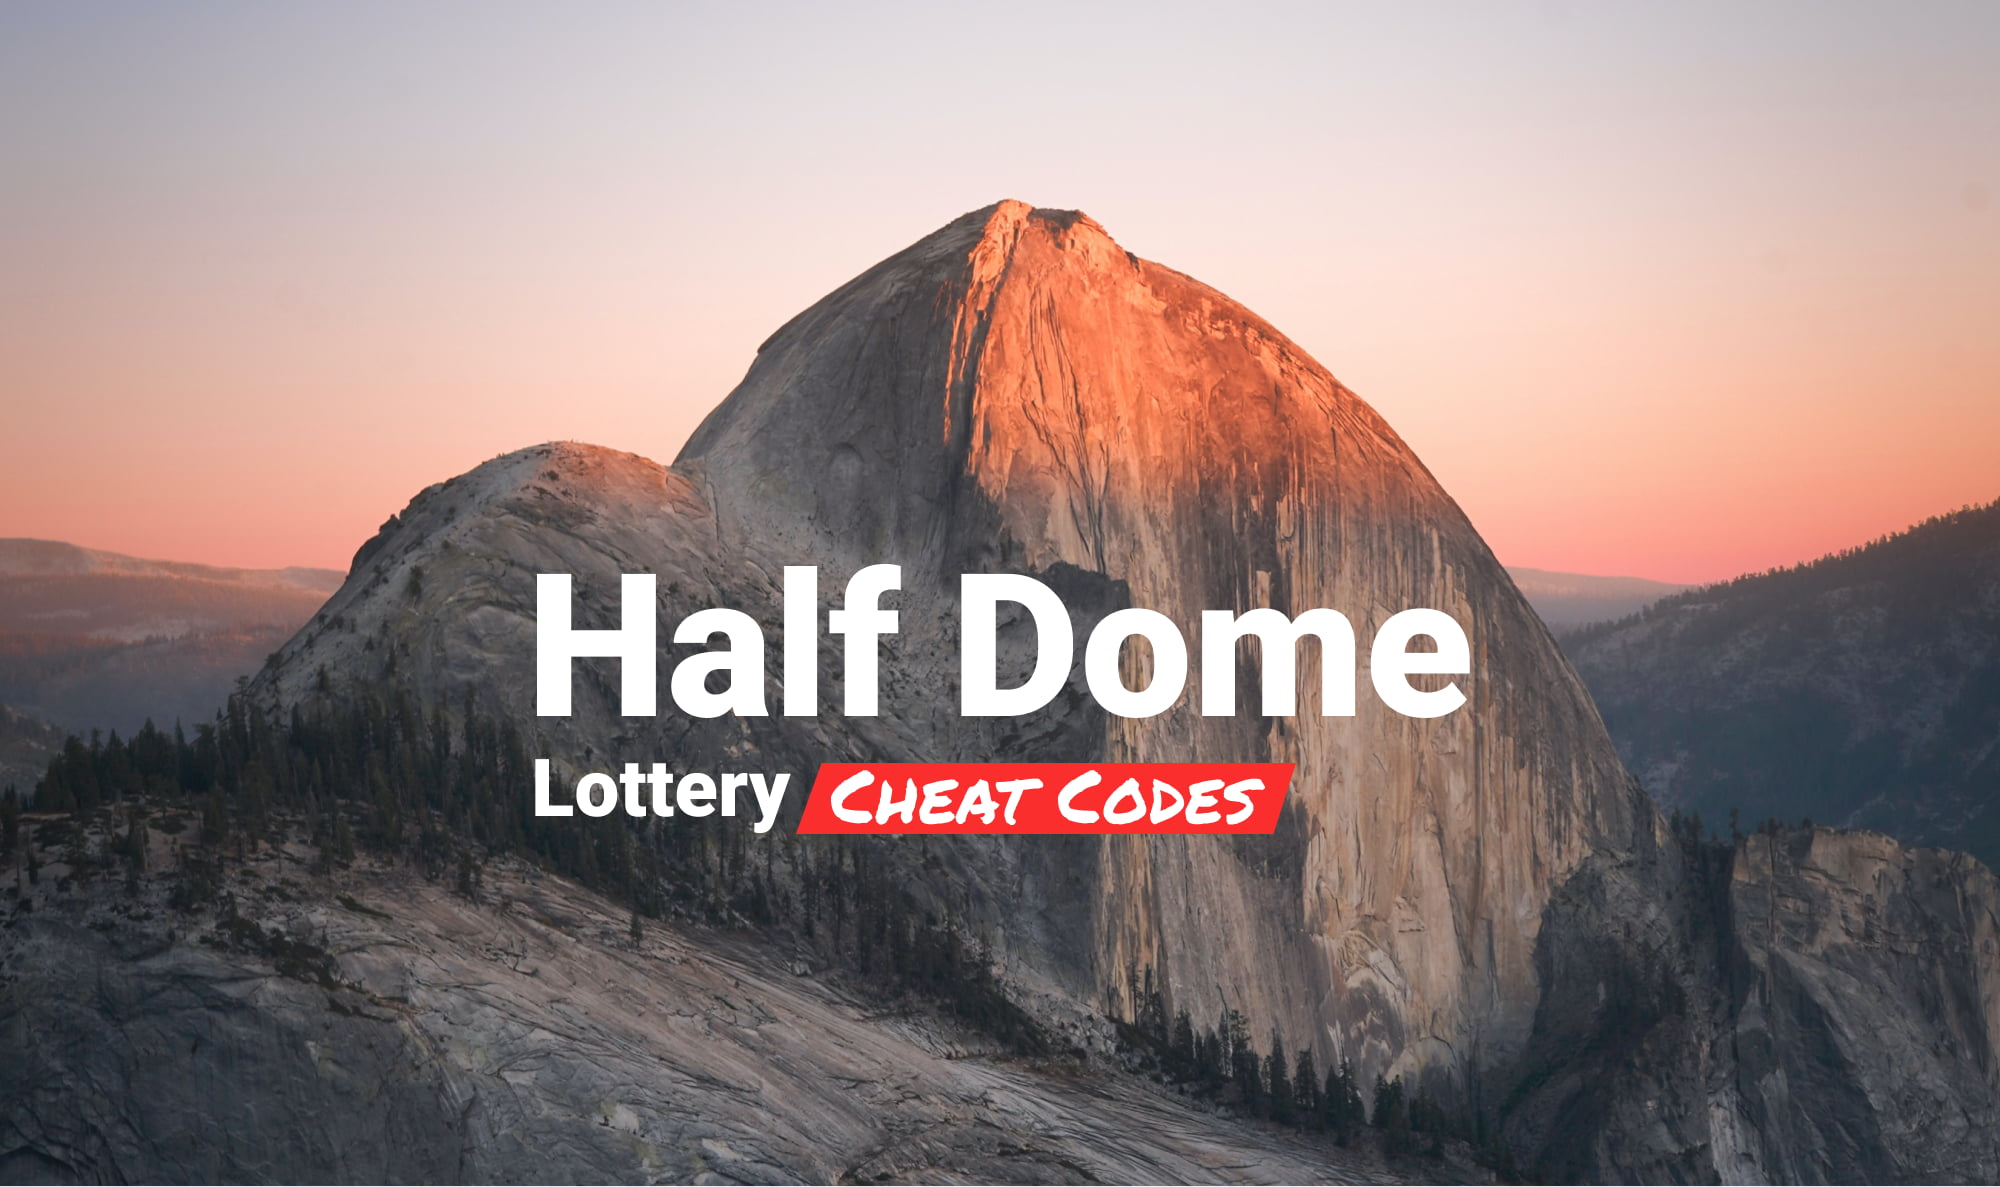 Half Dome Lottery Cheat Codes